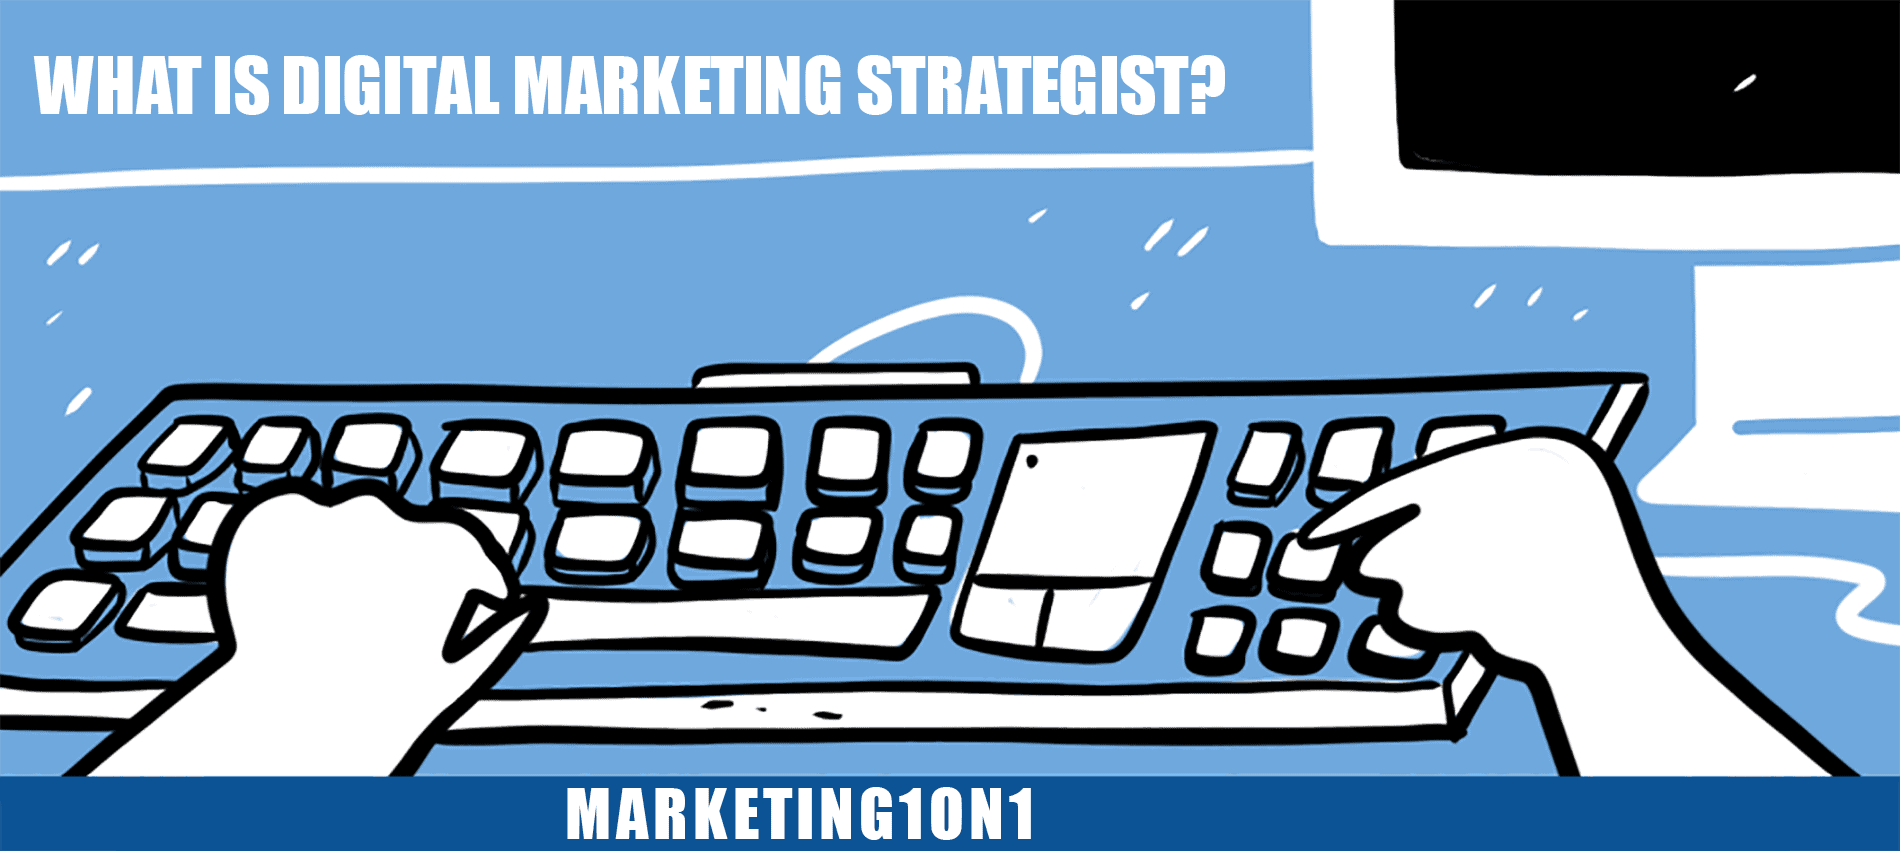 What is digital marketing strategist?